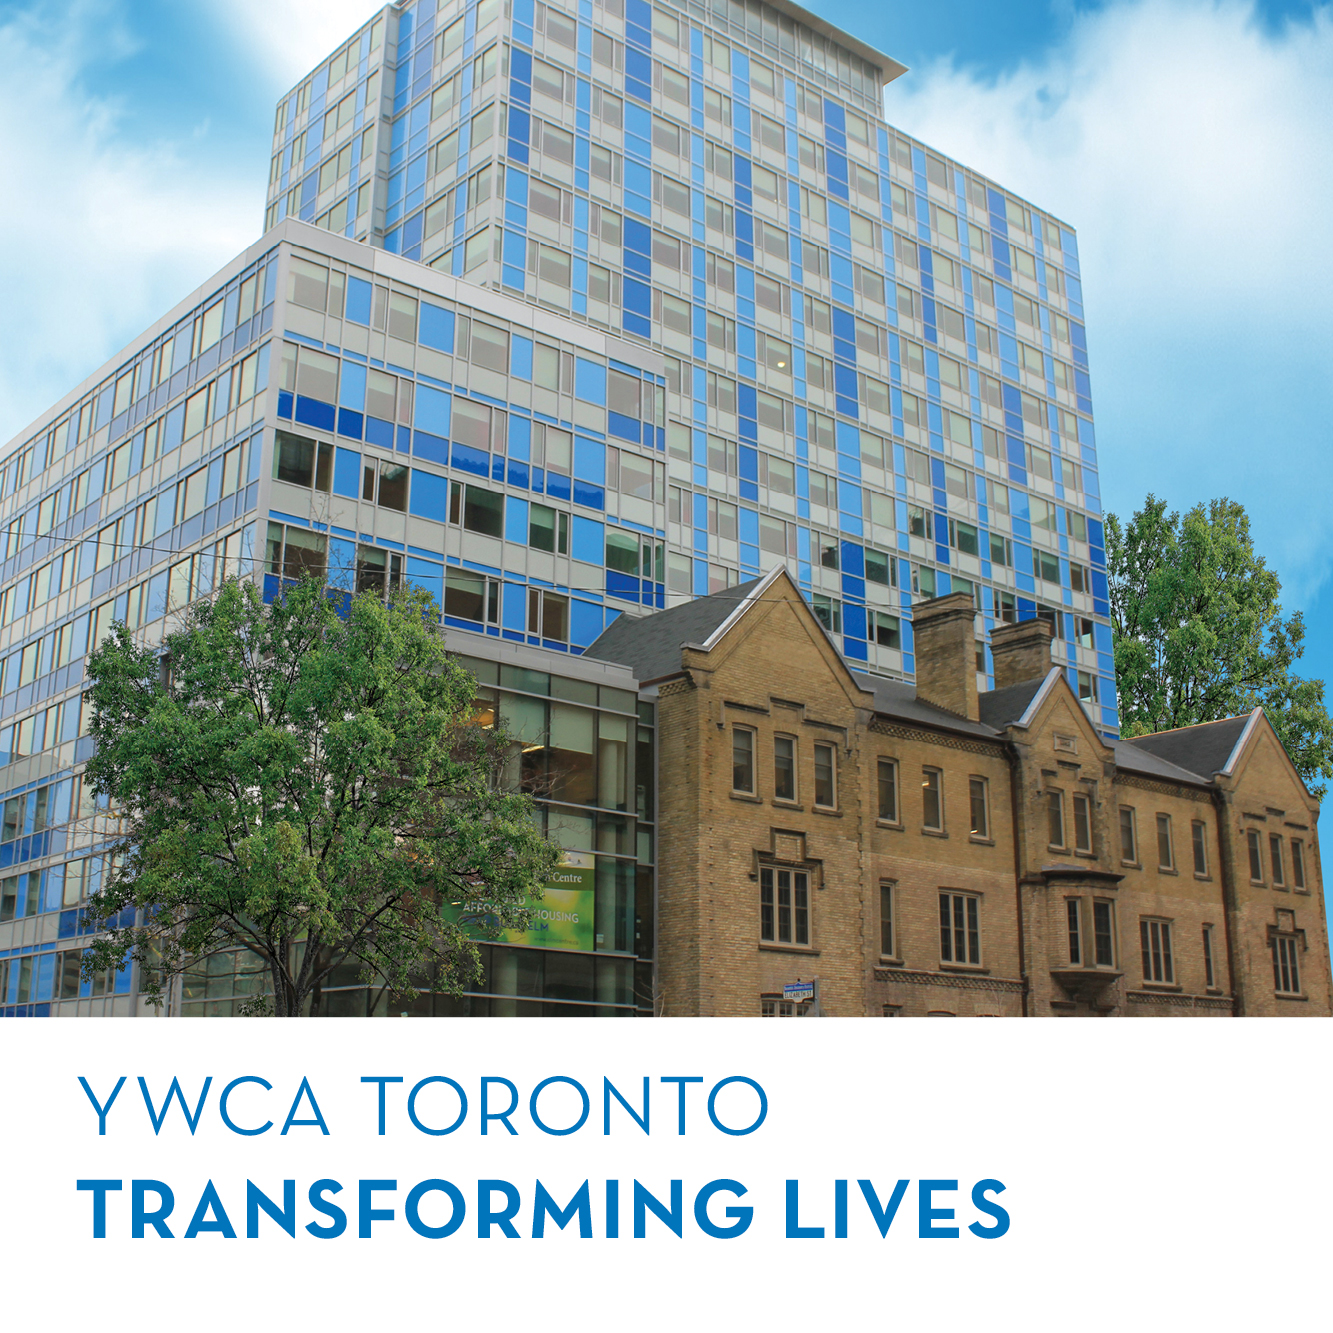 YWCA Toronto